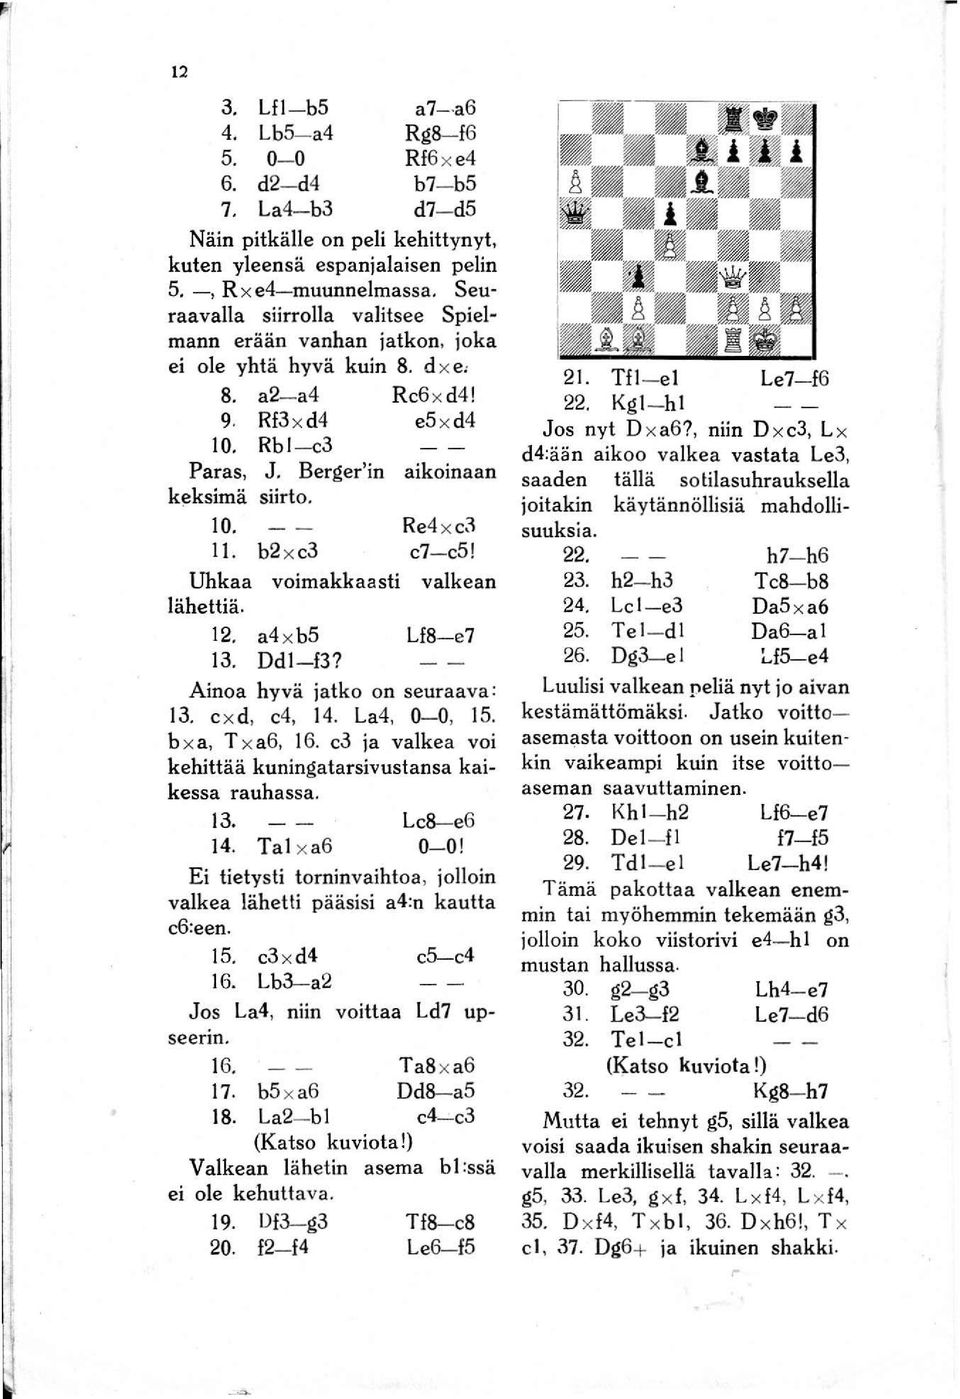 10. II. b2 x c3 Re4 x e:l c7-es! Uhkaa voimakkaasti valkean lähettiä. 12. a4 x bs US-e7 13. Ddl-f3? Ainoa hyvä jatko on seuraava: 13. ex d, e4, 14. La4, 0-0, IS. b x a, T x a6, 16.